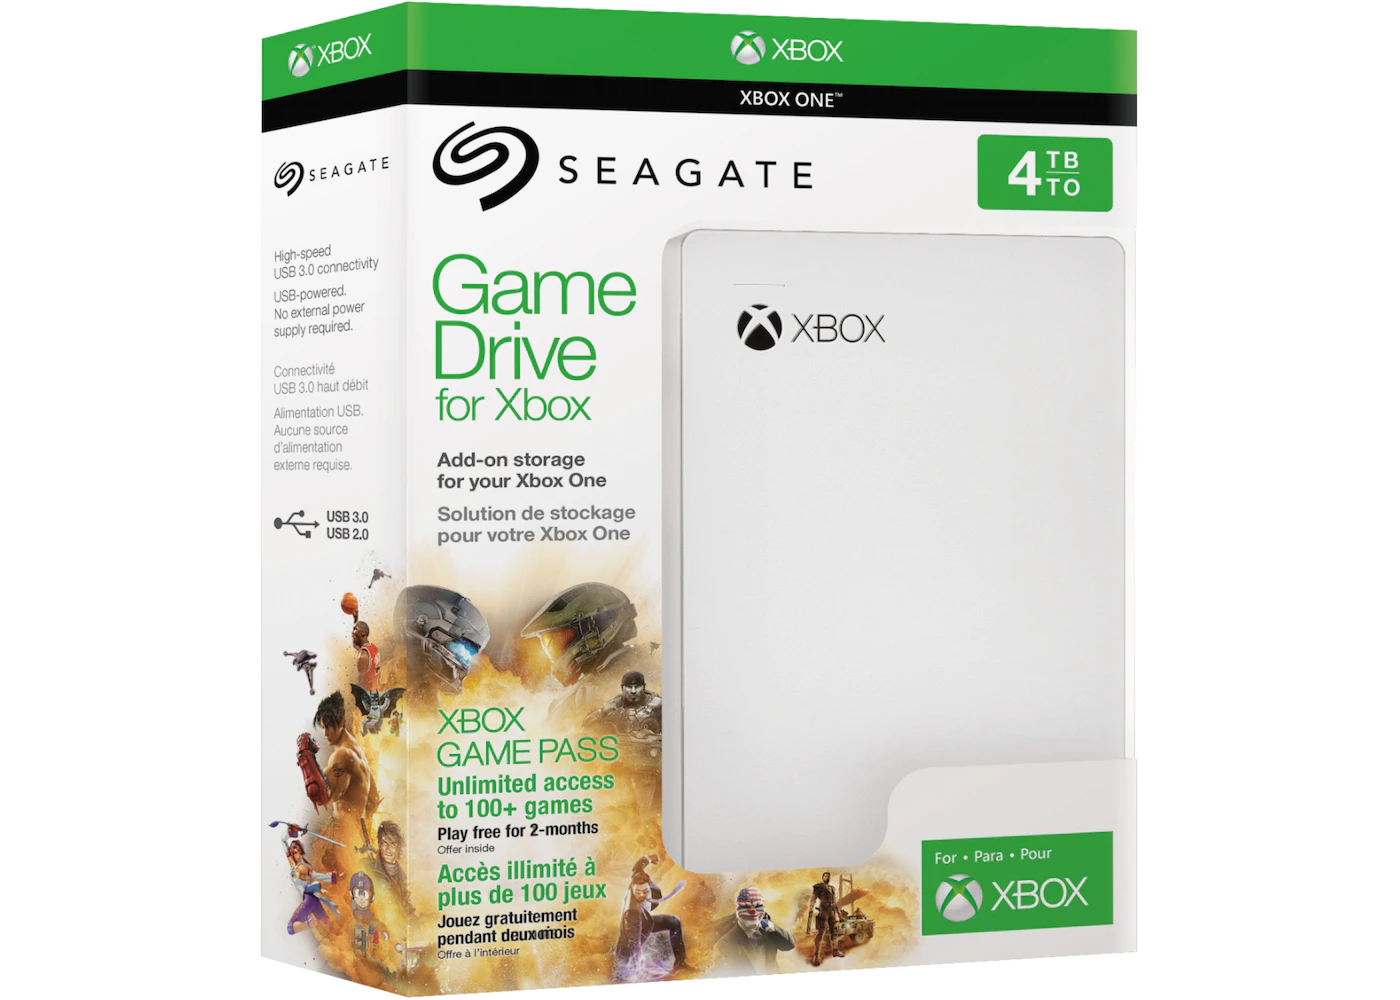 Birma kalkoen kwaadheid de vrije loop geven Seagate Game Drive for Xbox 4TB Portable Hard Drive STEA4000407 - US